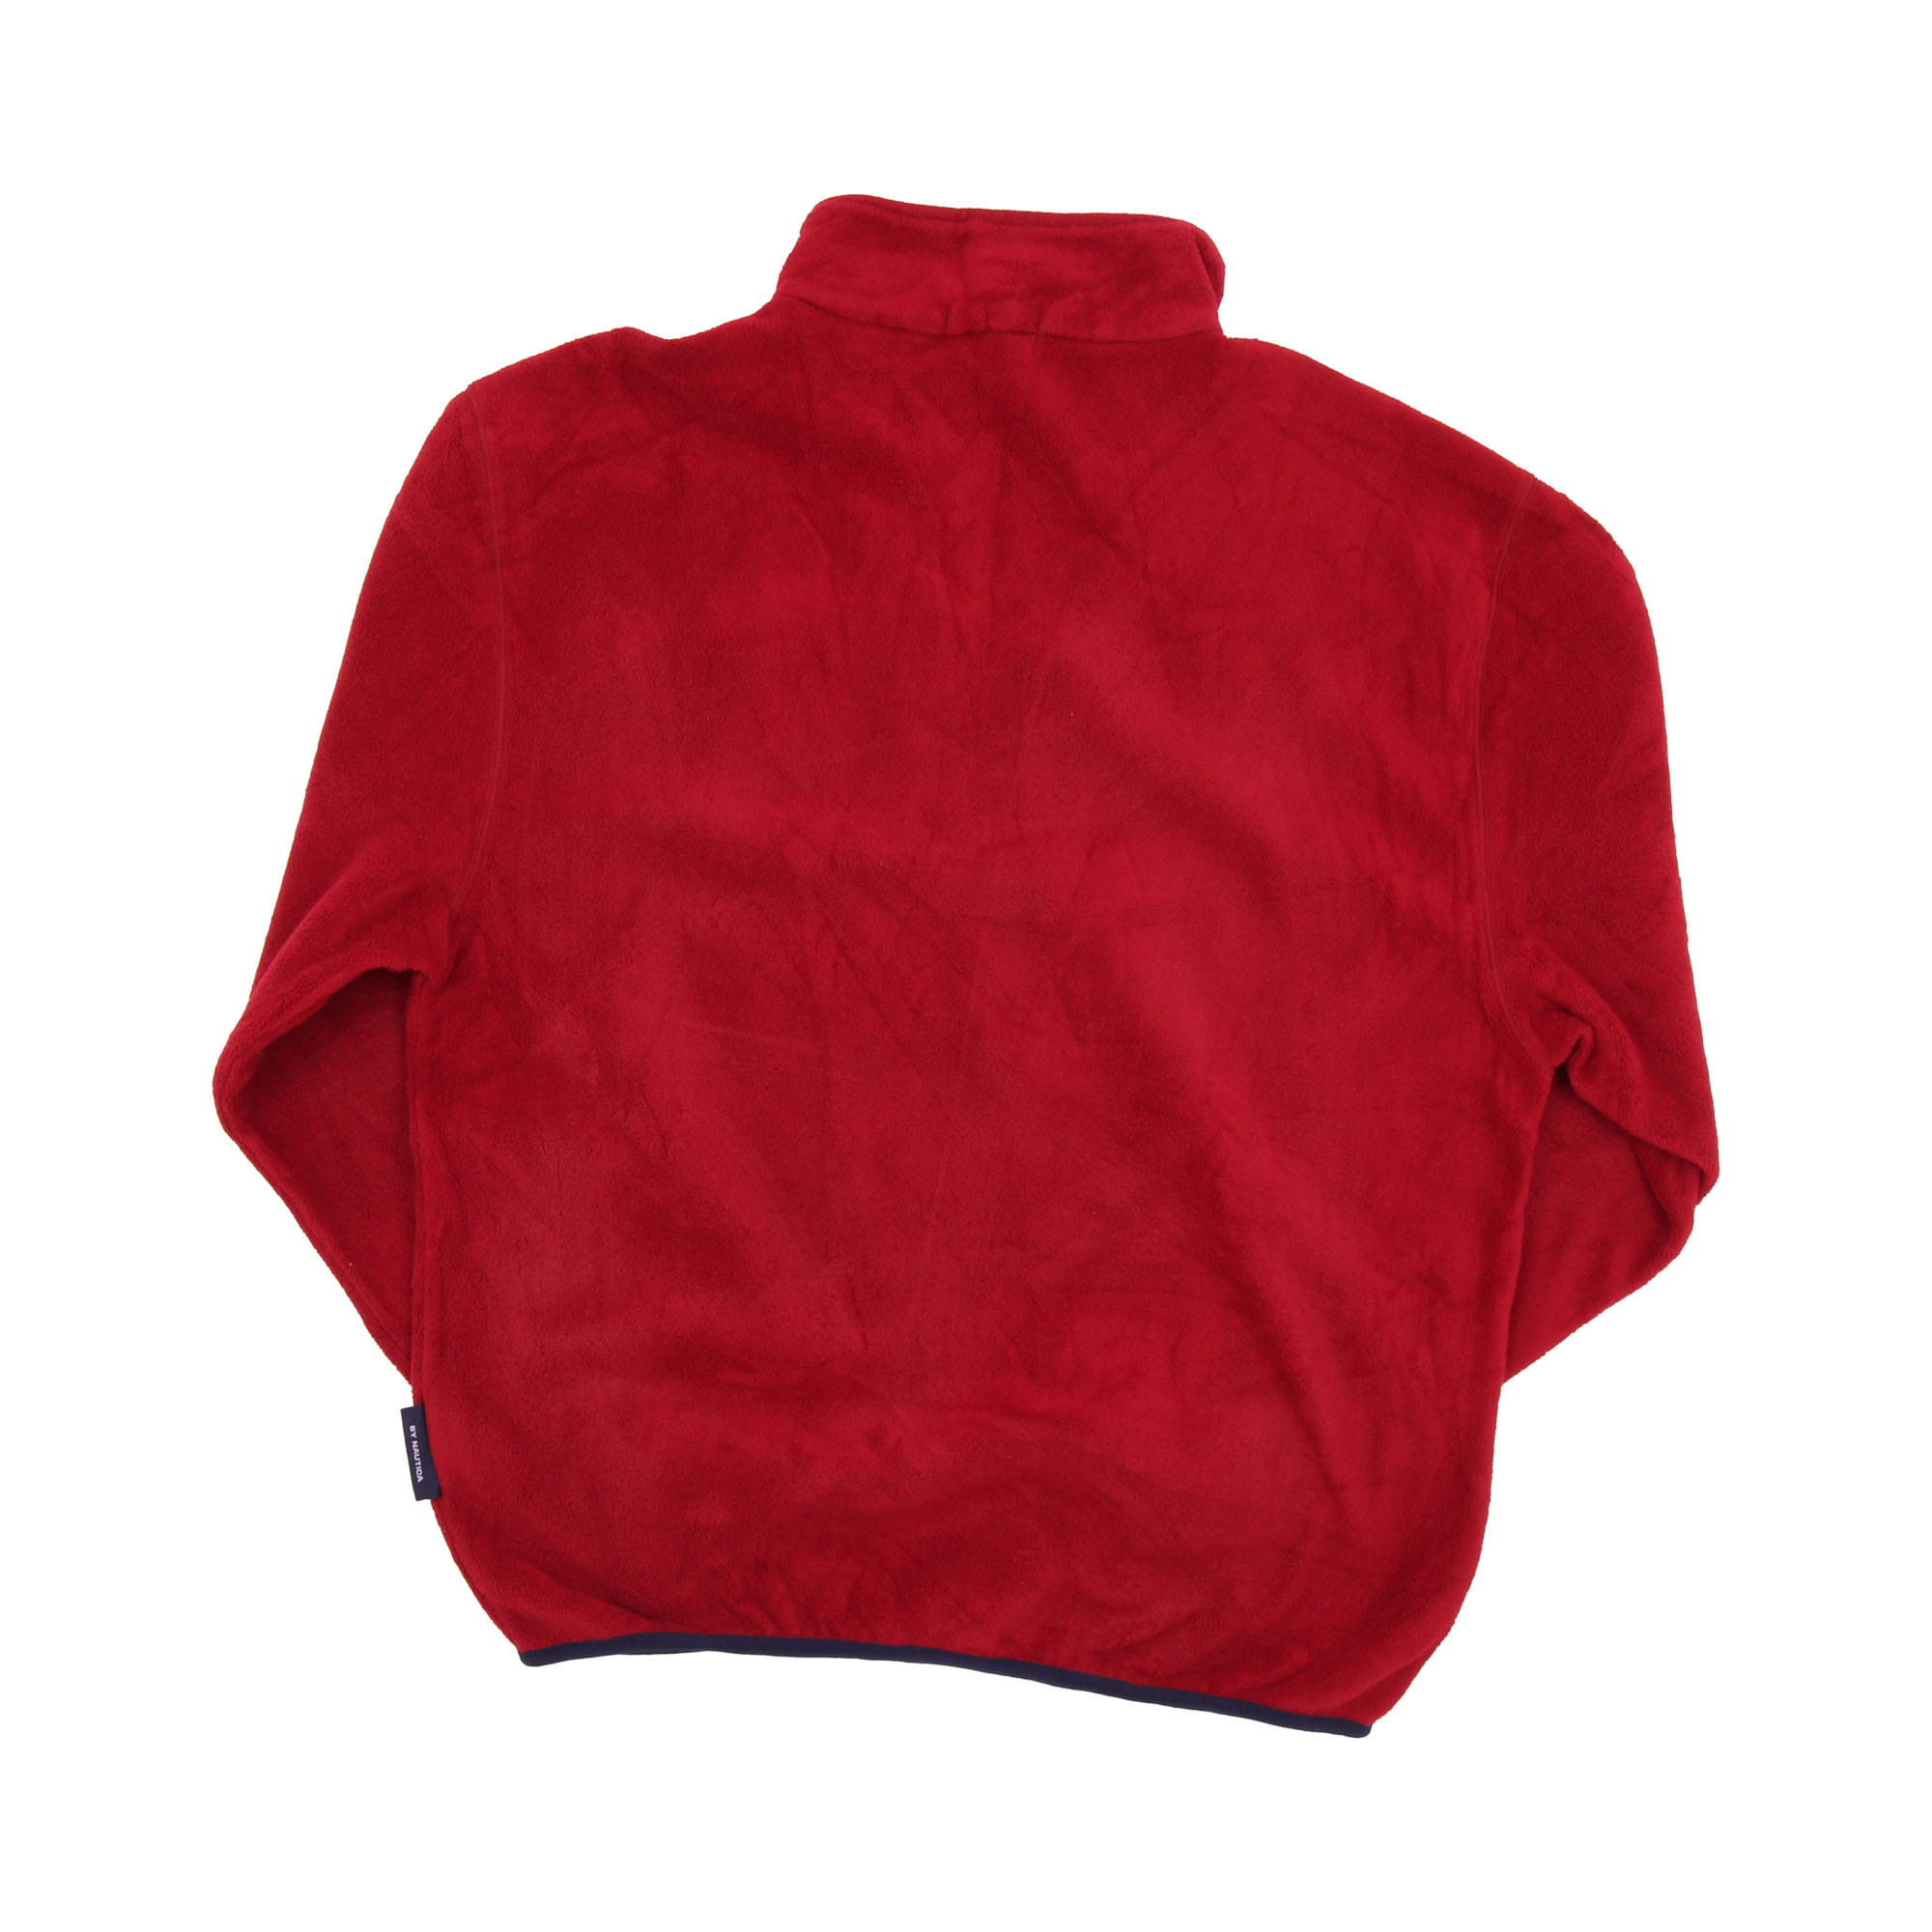 Nautica Fleece Red -  XL